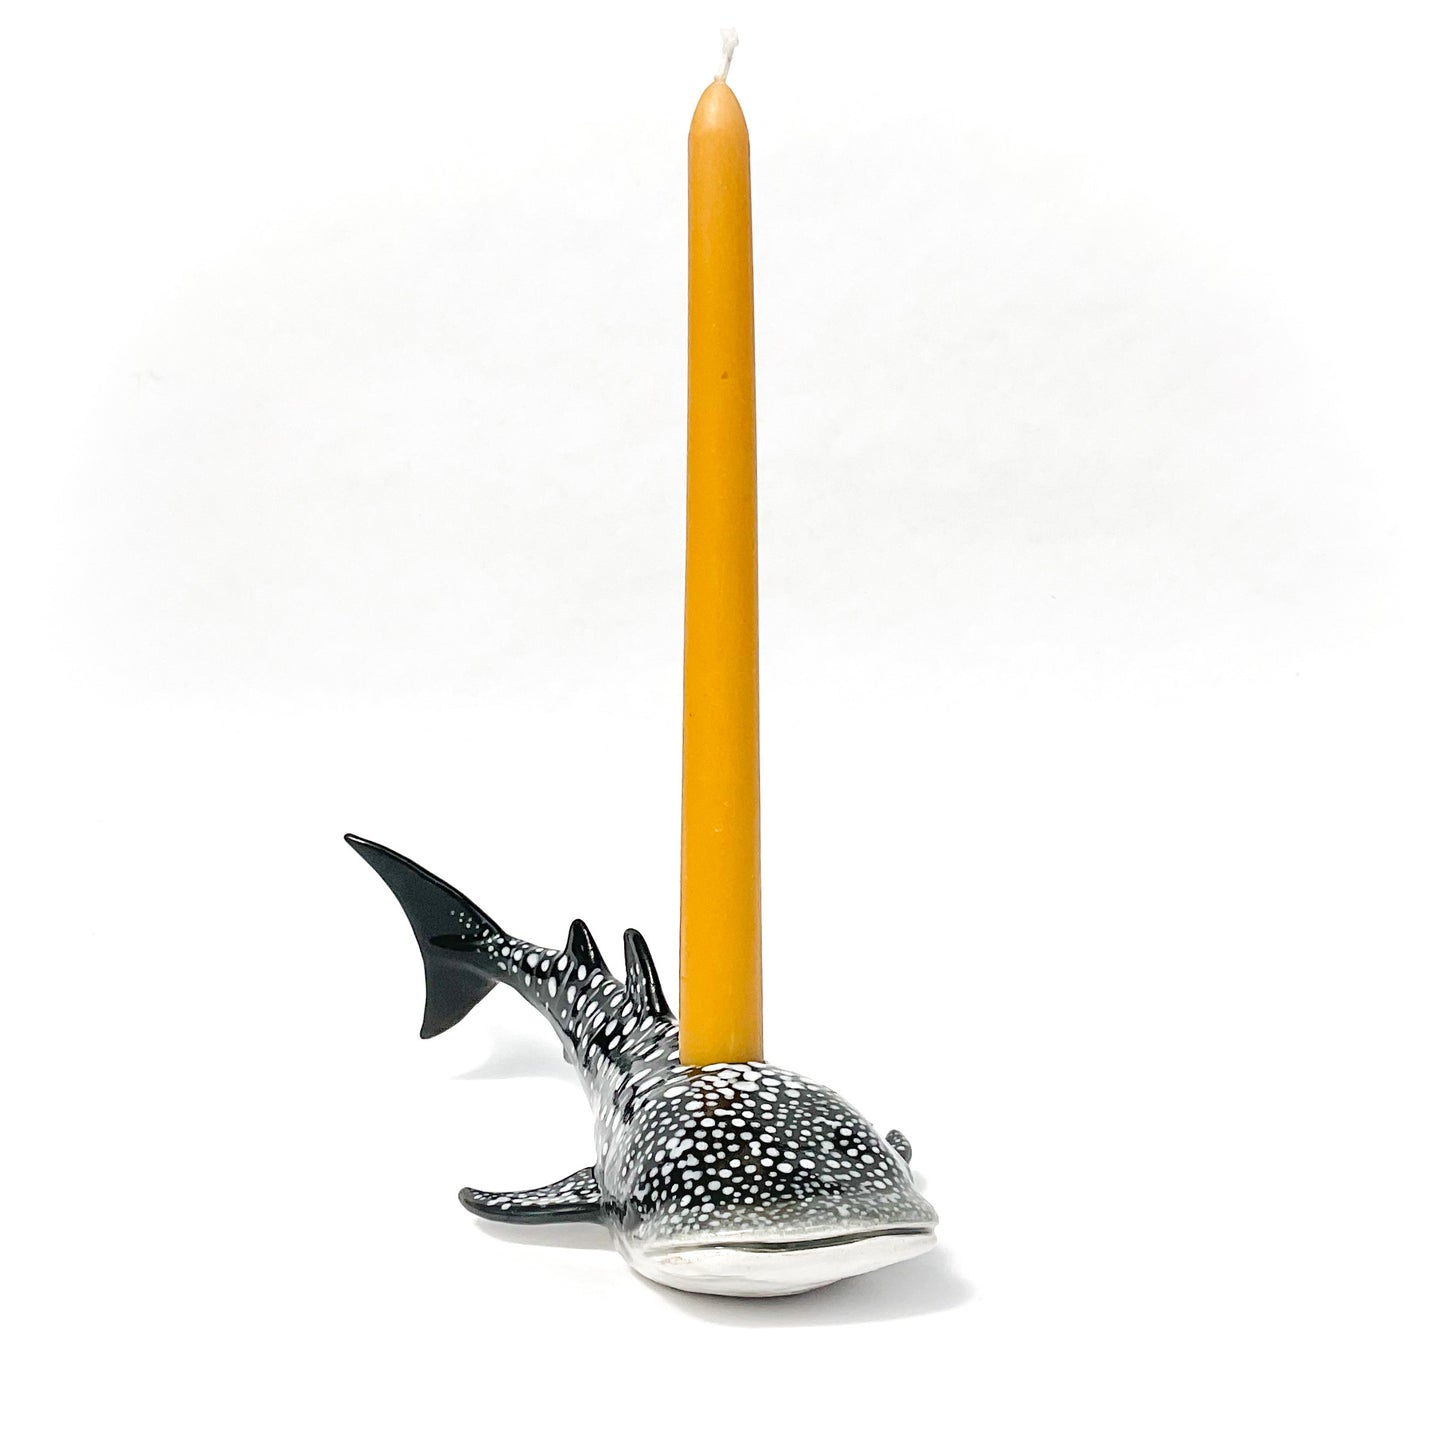 Whale Shark Ceramic Candlestick Holder